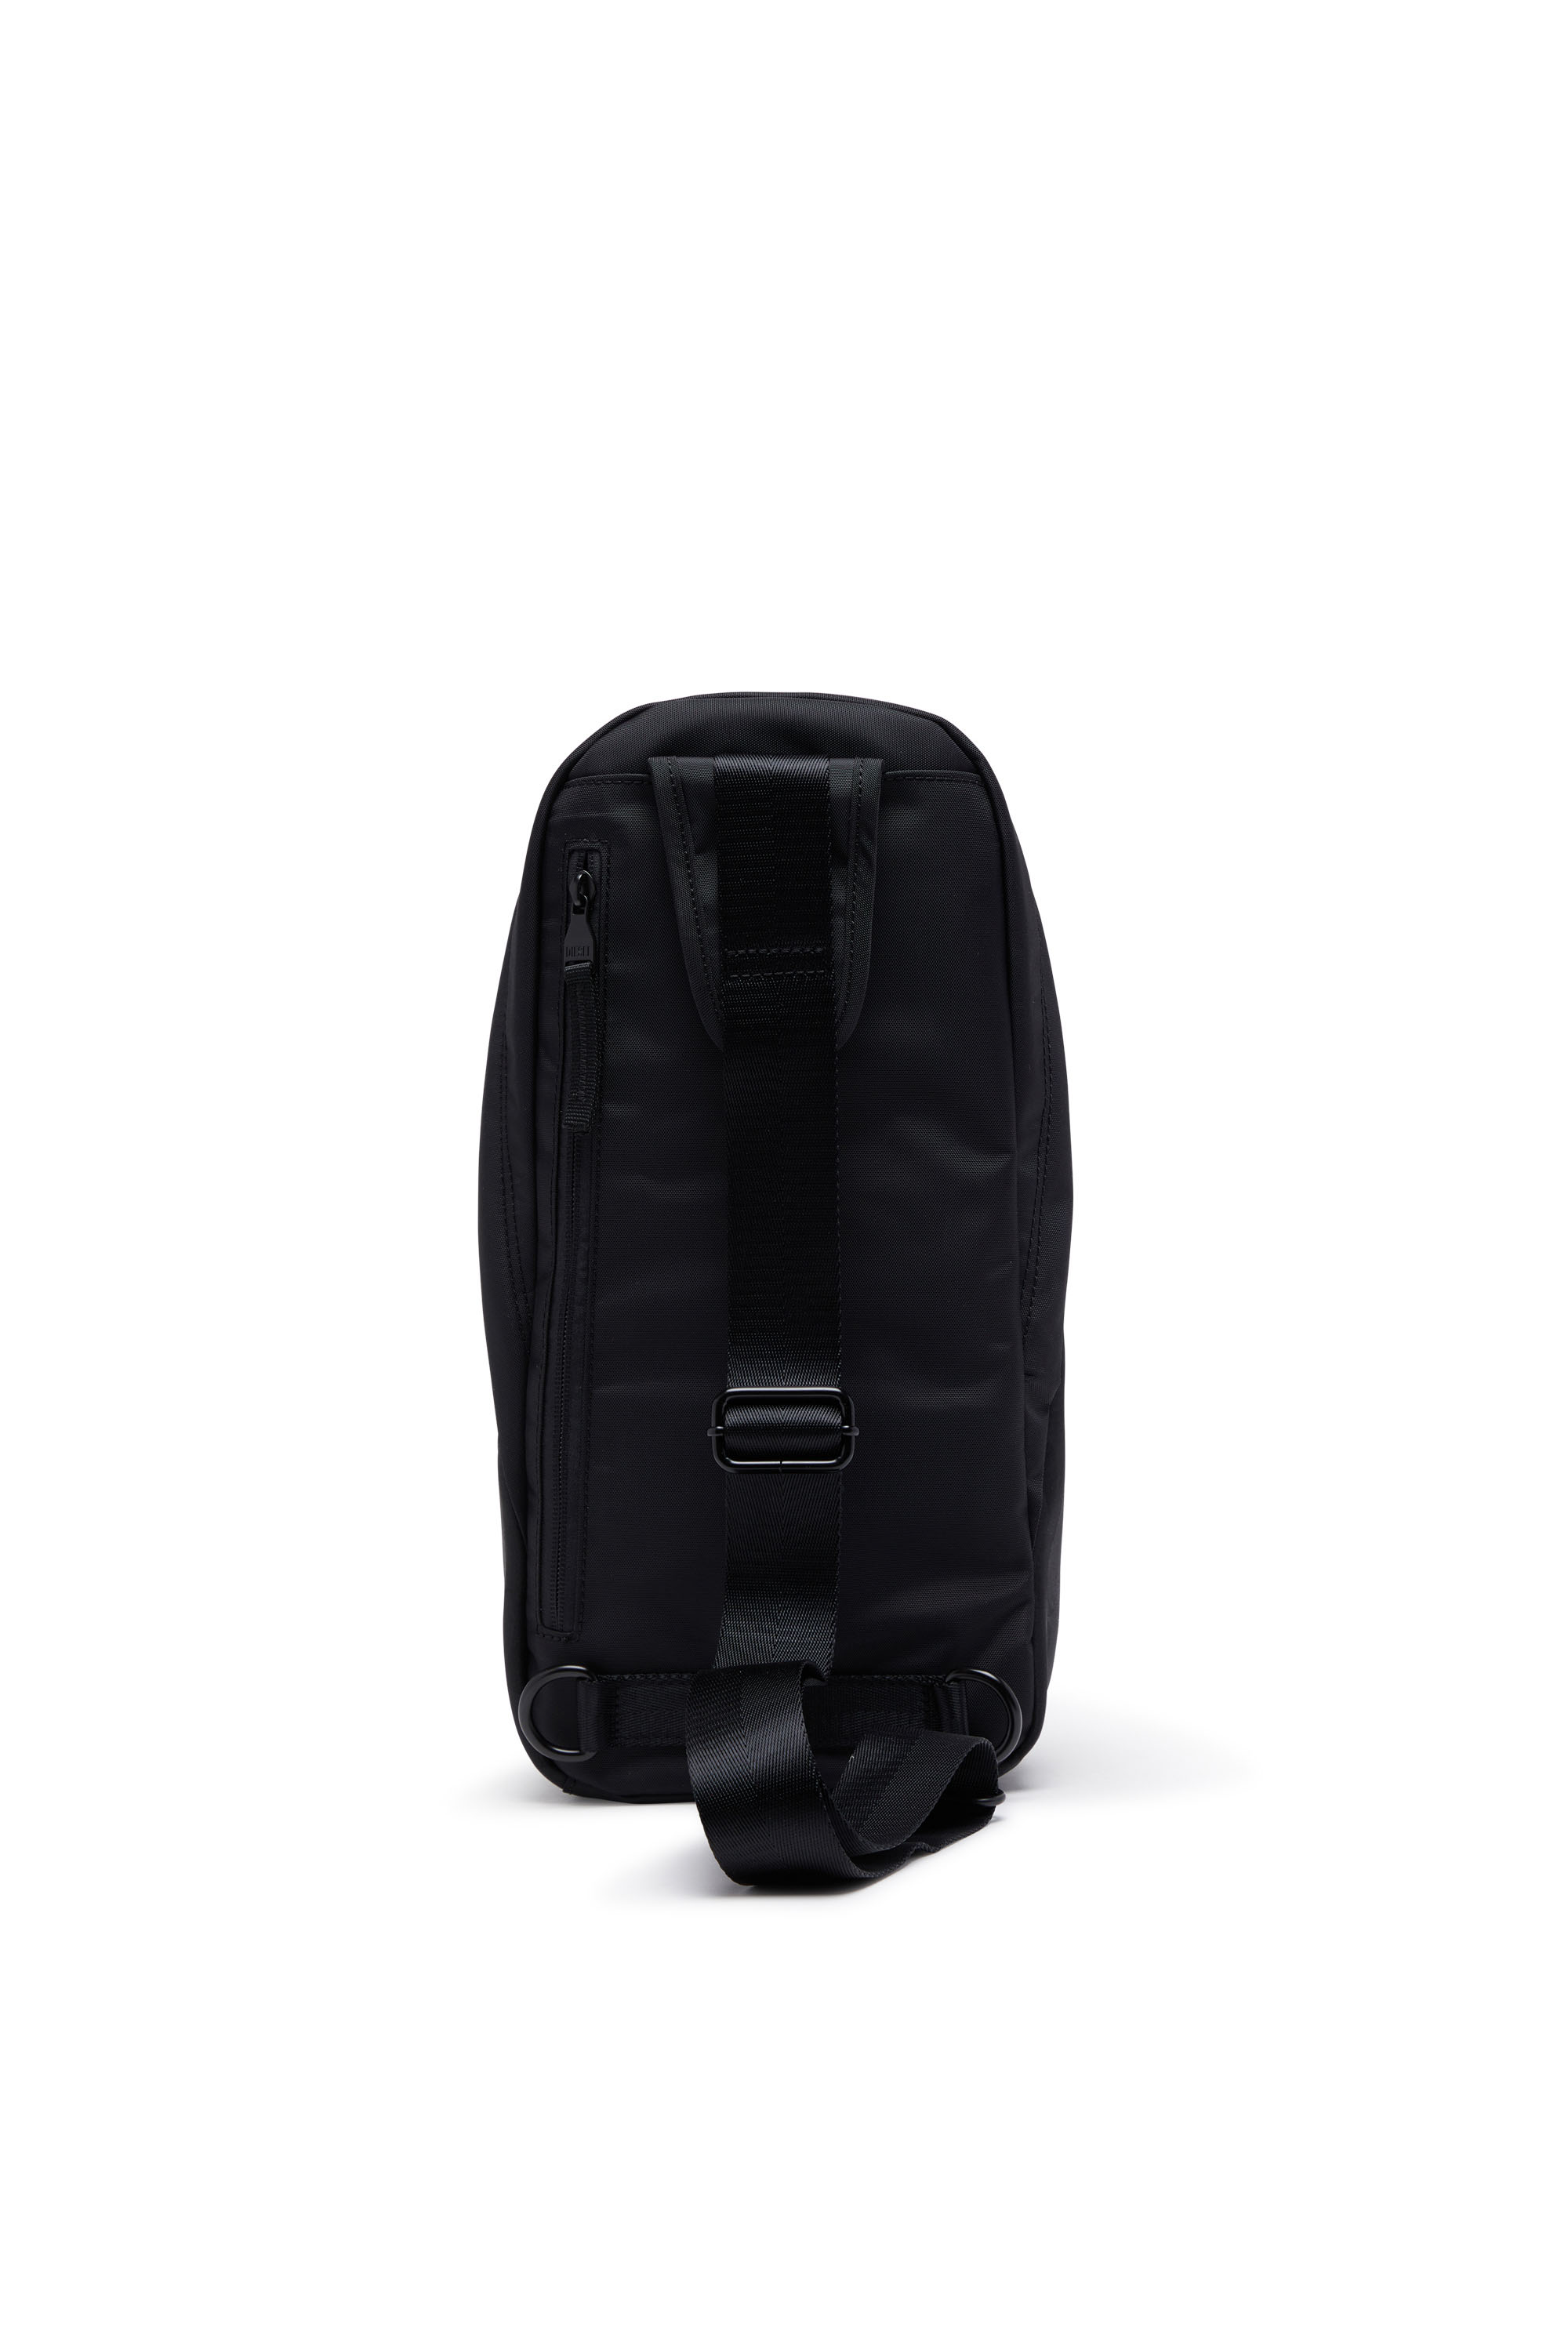 Diesel side pockets BISIE backpack with zip closure men - Glamood Outlet